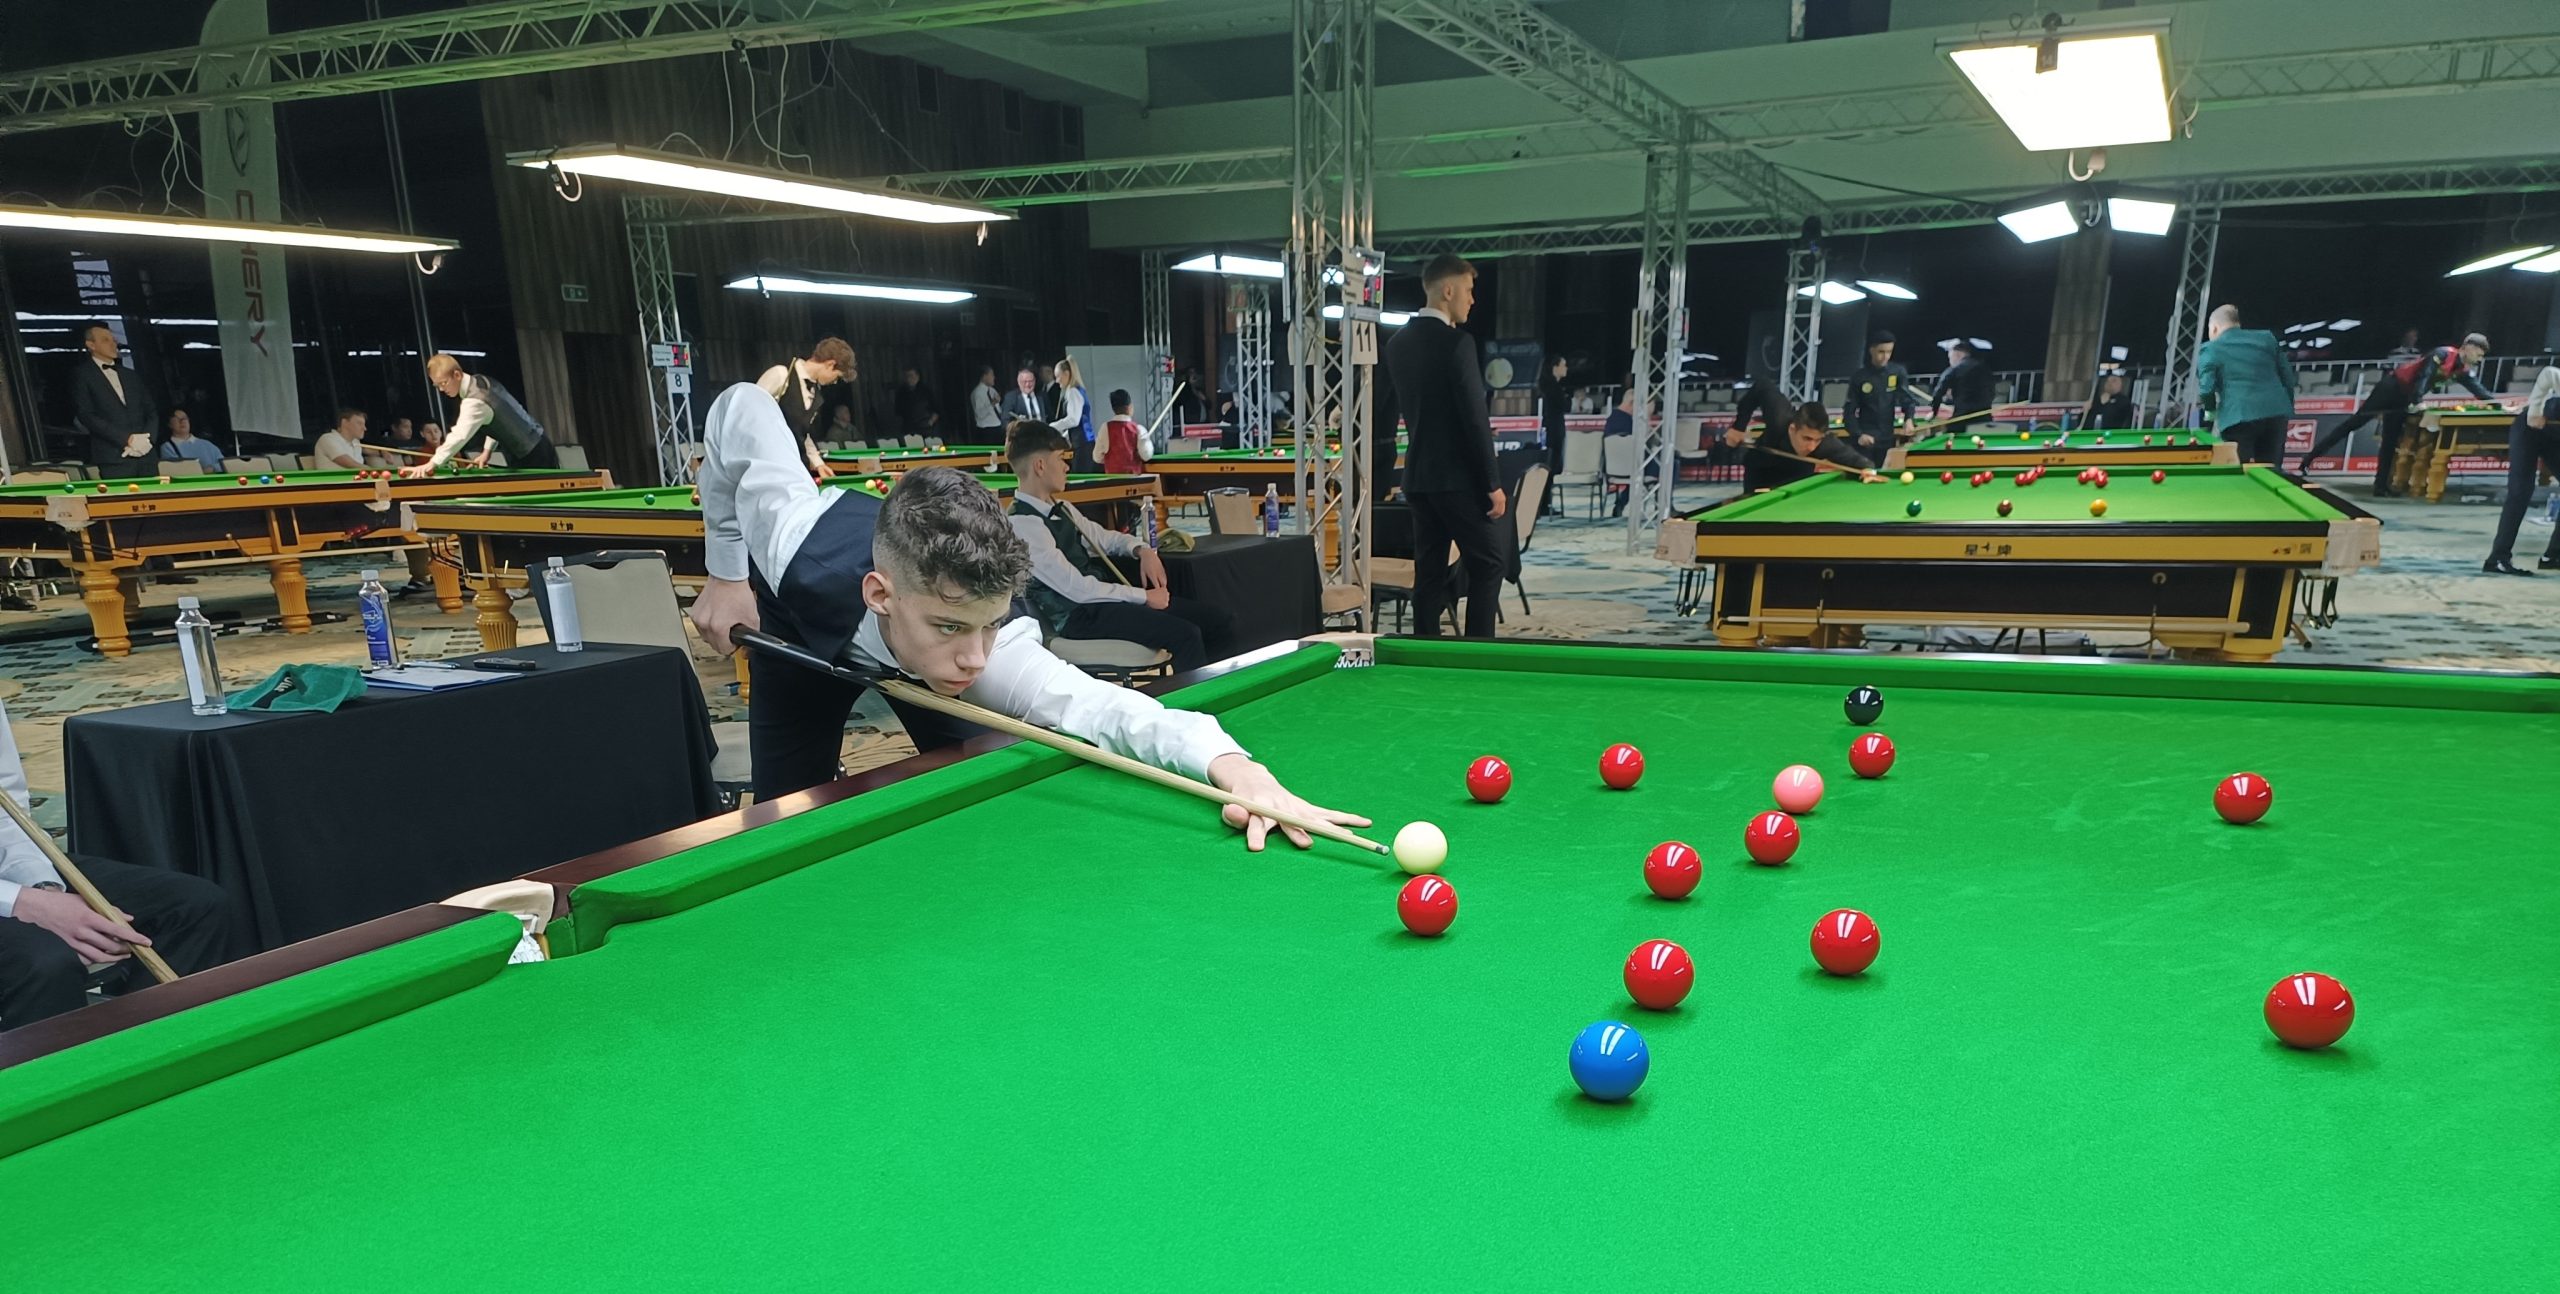 Day Four in Sarajevo and the Under 18 Championship European Billiards